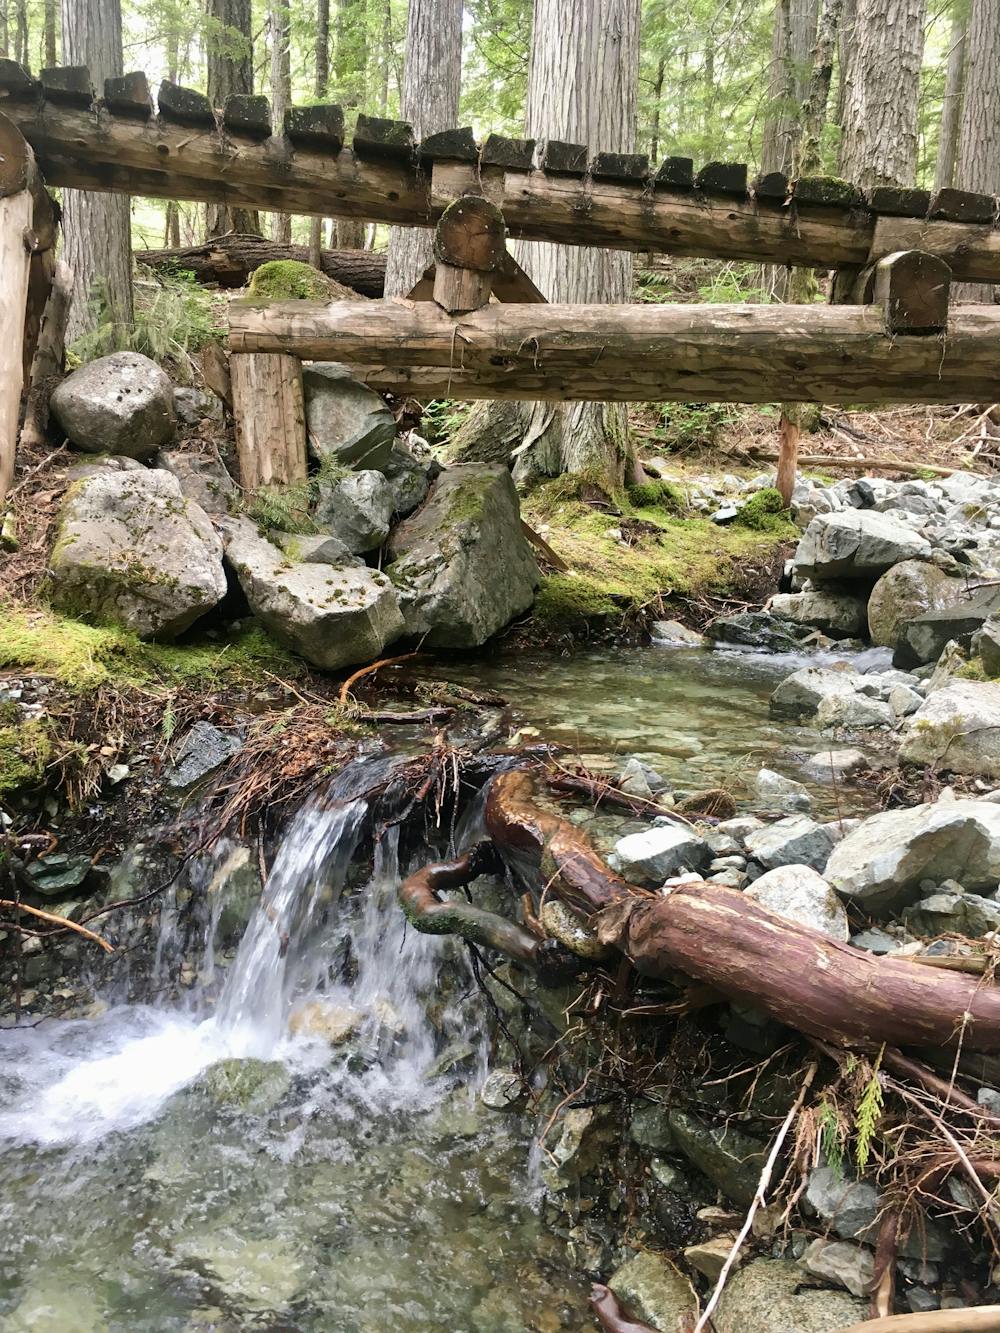 You'll cross several beautiful streams